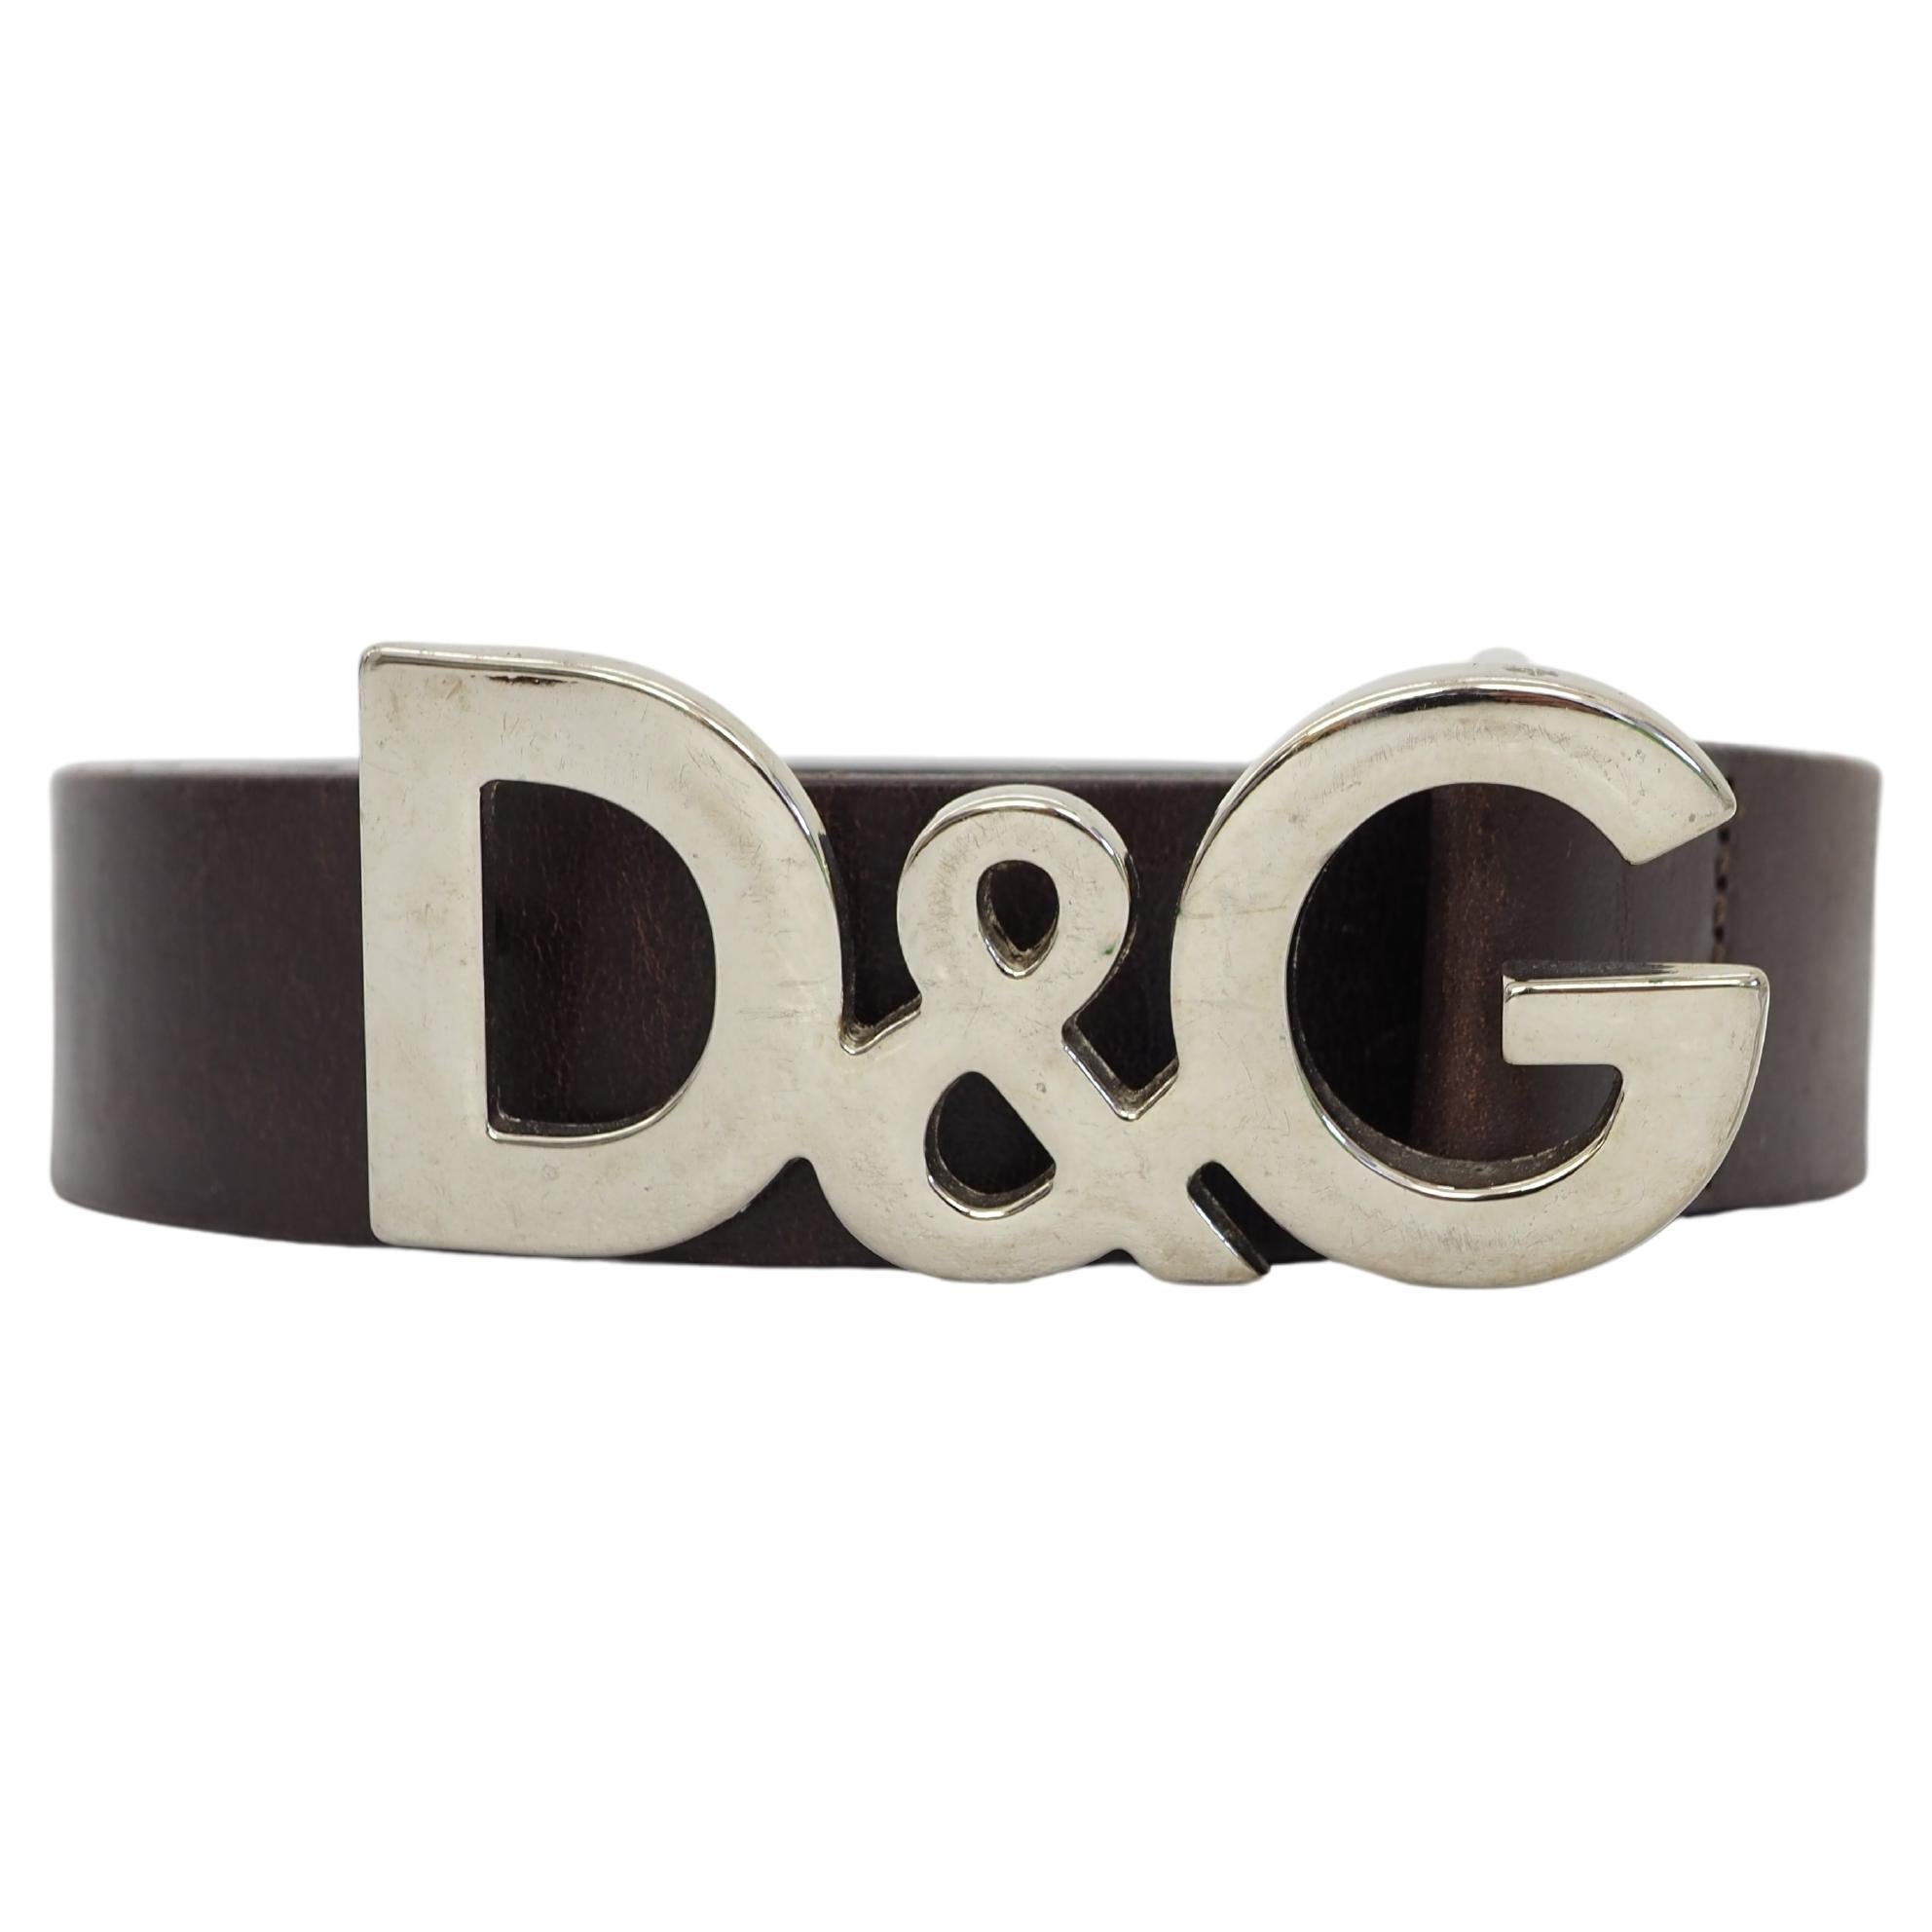 Dolce & Gabbana leather belt For Sale